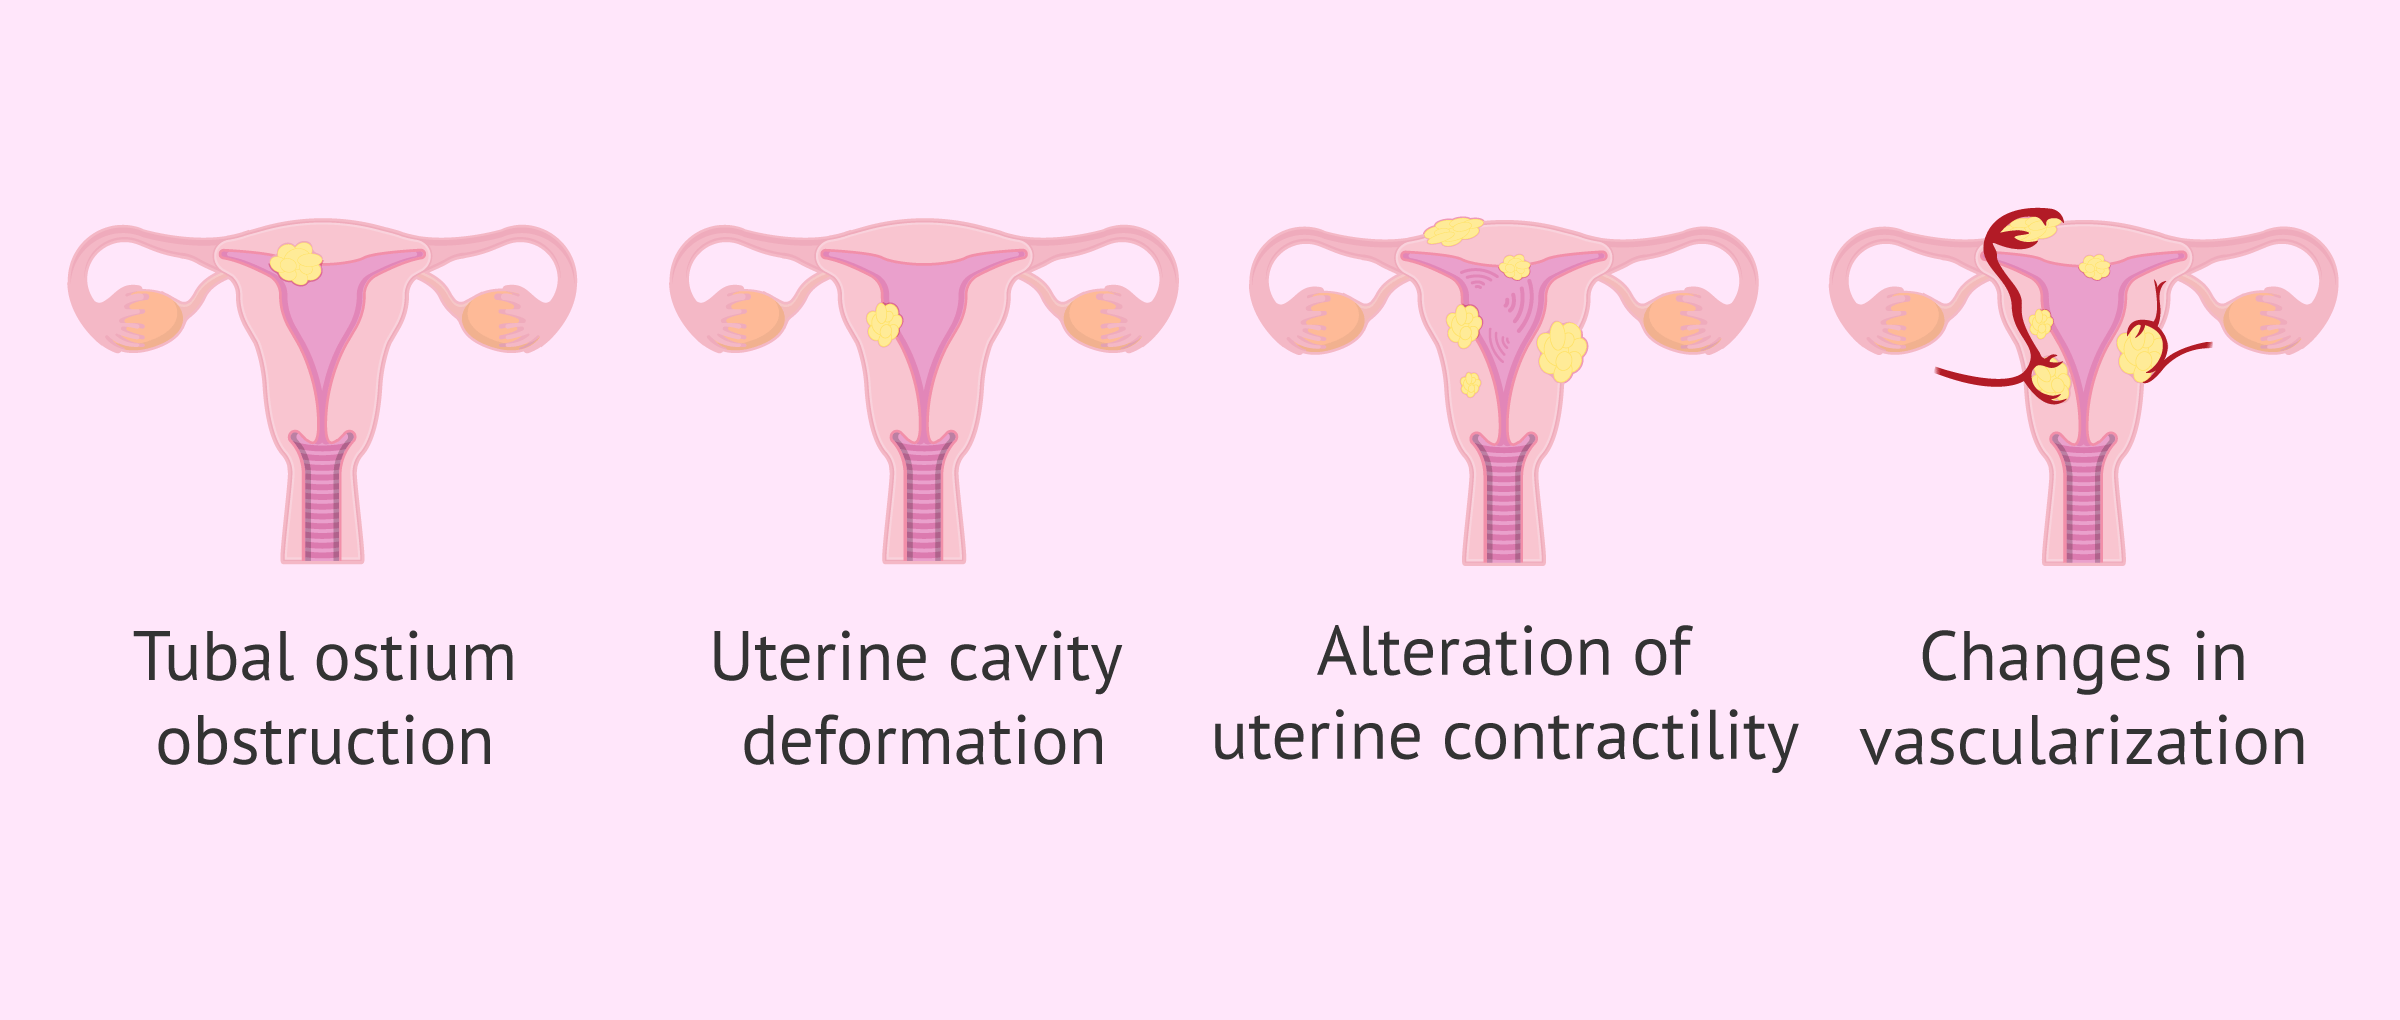 How can uterine fibroids affect fertility?